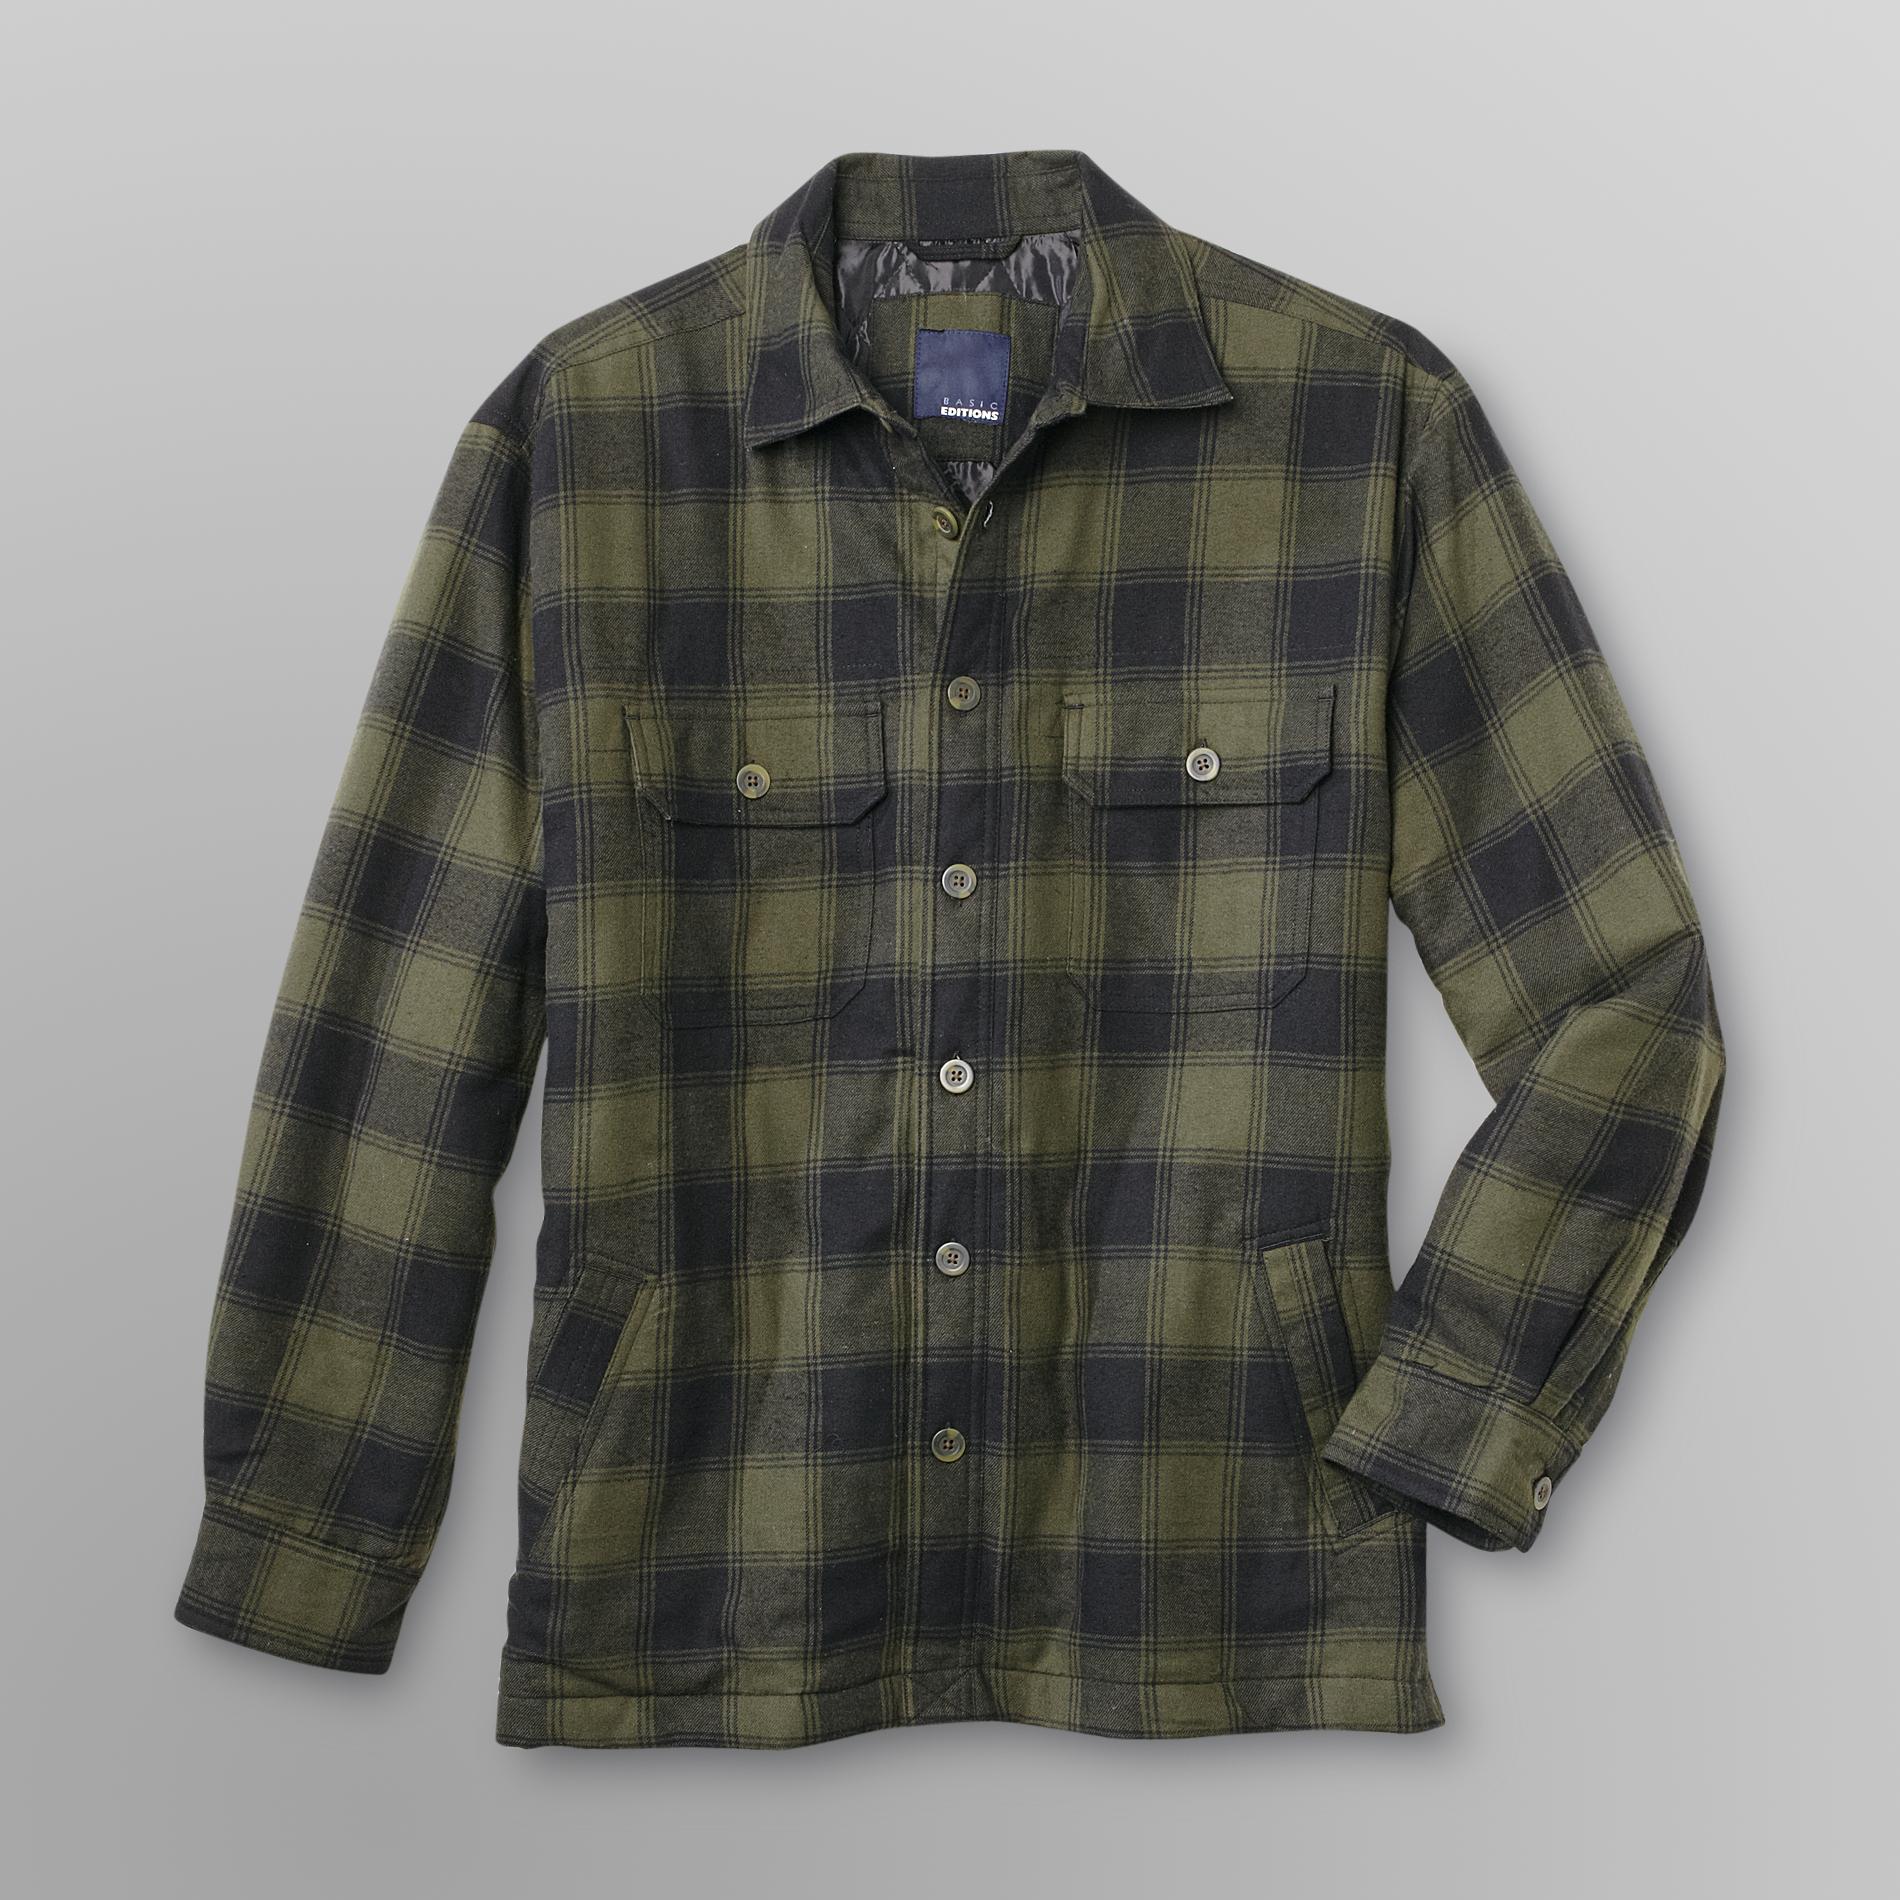 Basic Editions Men's Flannel Shirt Jacket - Plaid